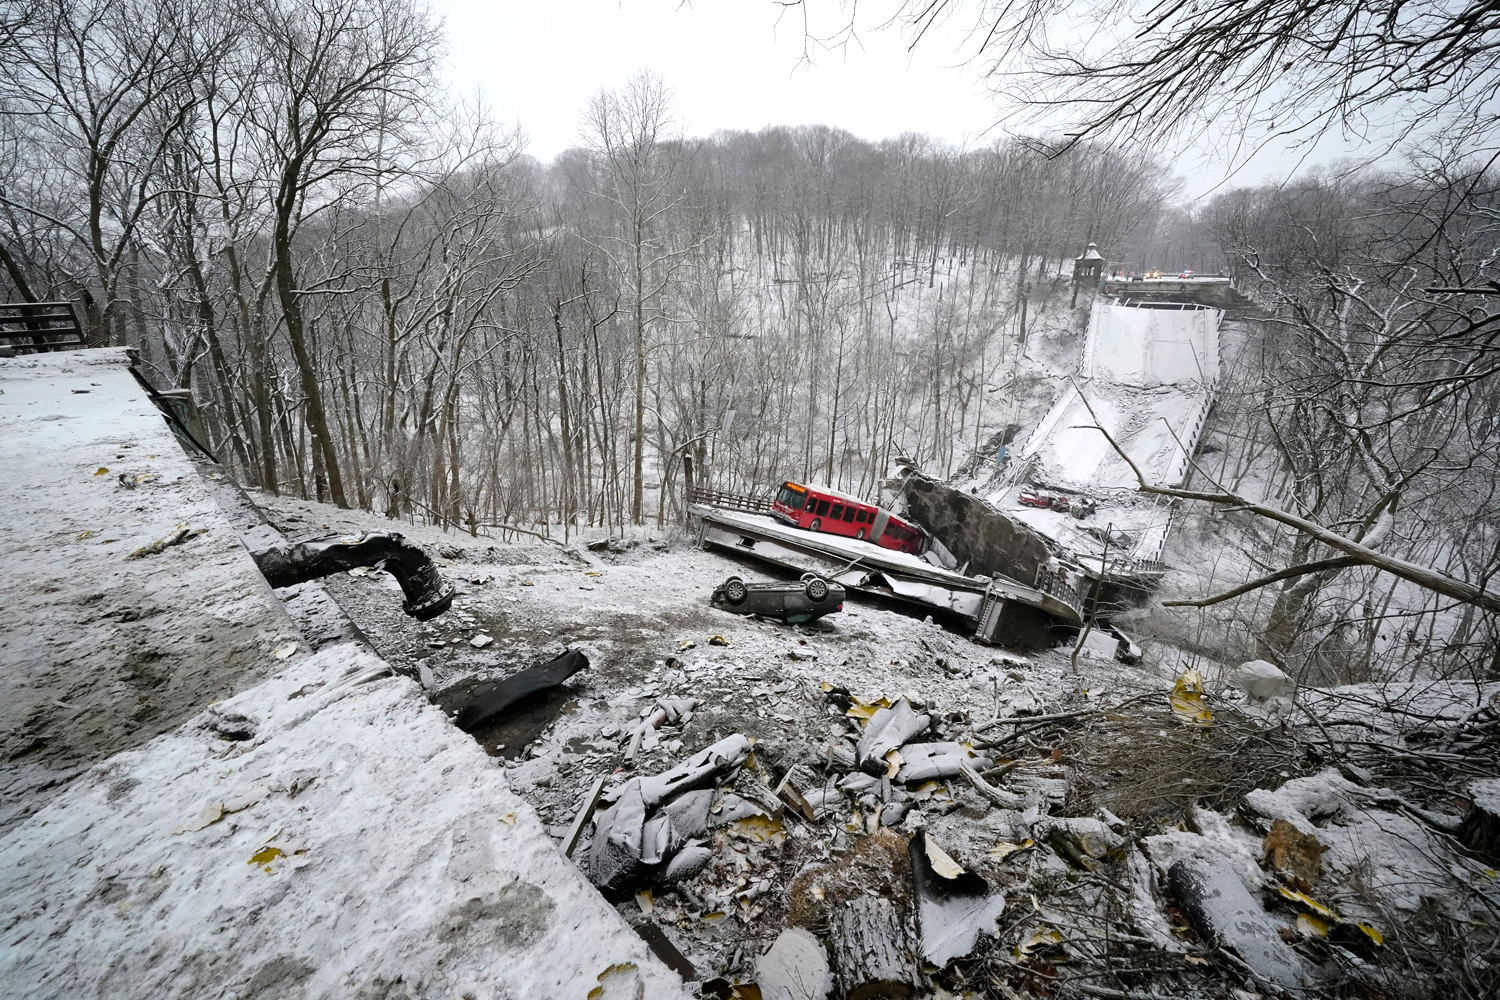 pittsburgh bridge collapse - Pittsburgh